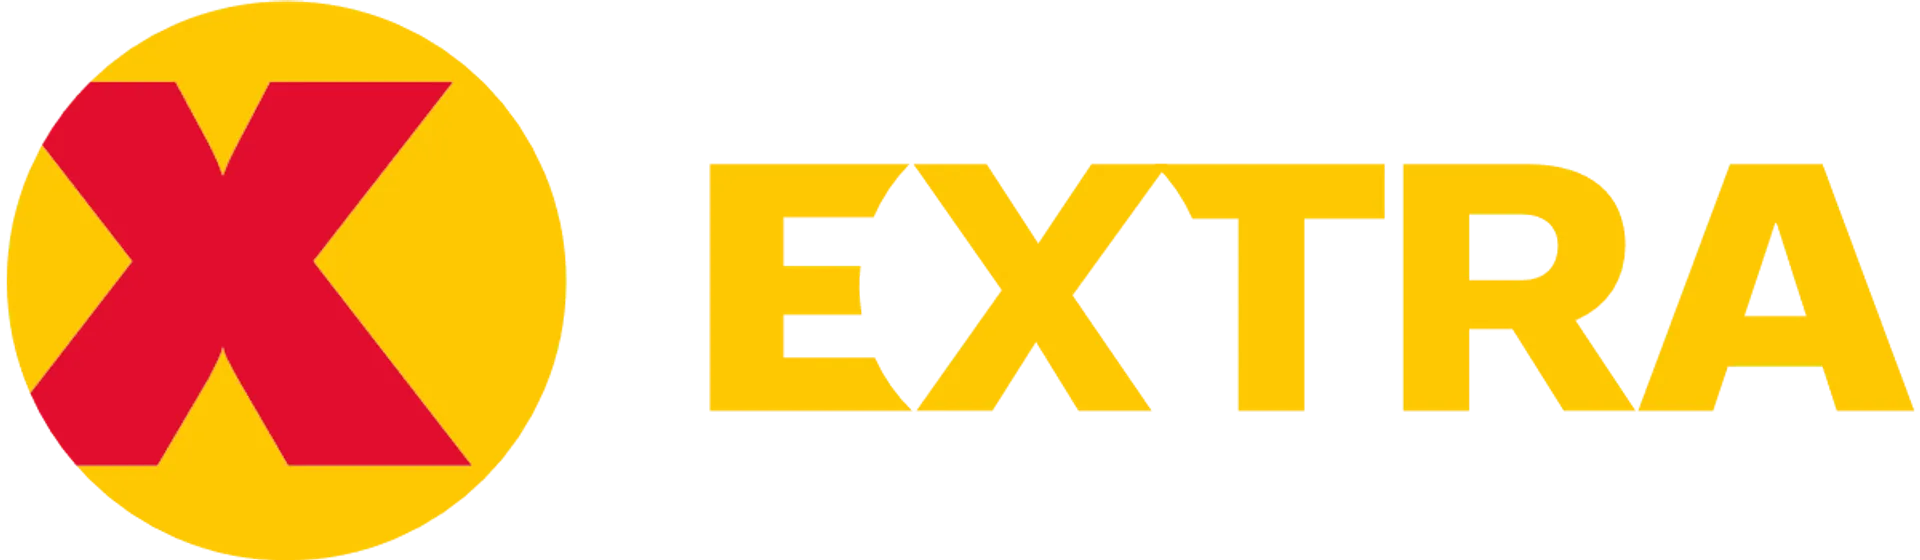 COOP EXTRA logo